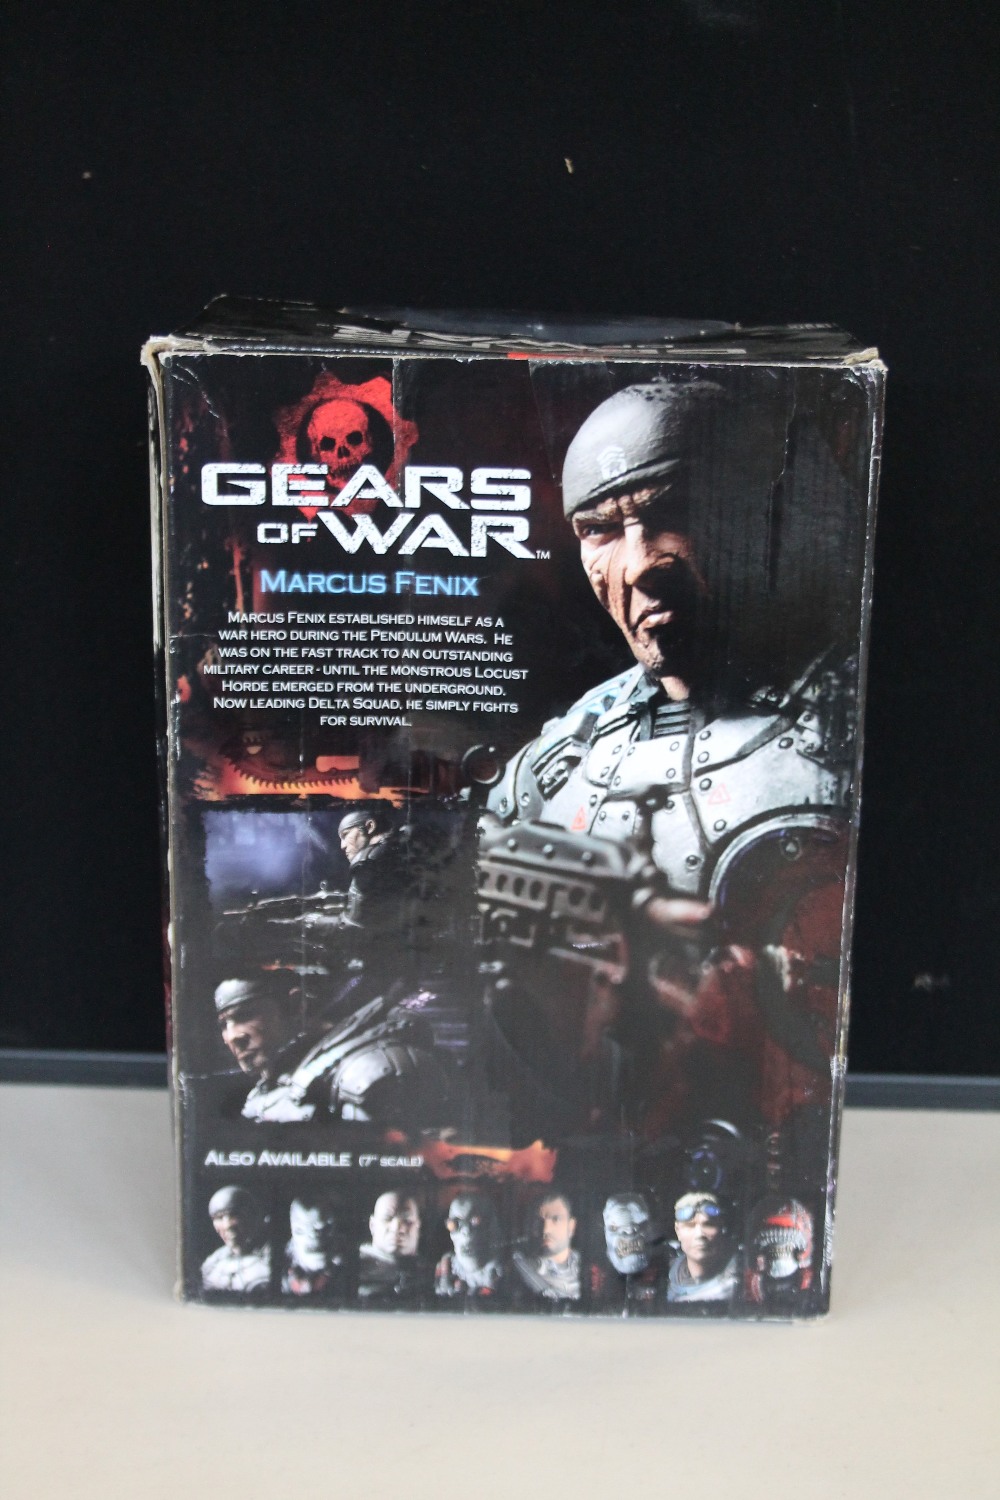 GEARS OF WAR FIGURINE - a NECA 12" Gears Of War GOW Marcus Fenix push button sound talking figurine - Image 3 of 3